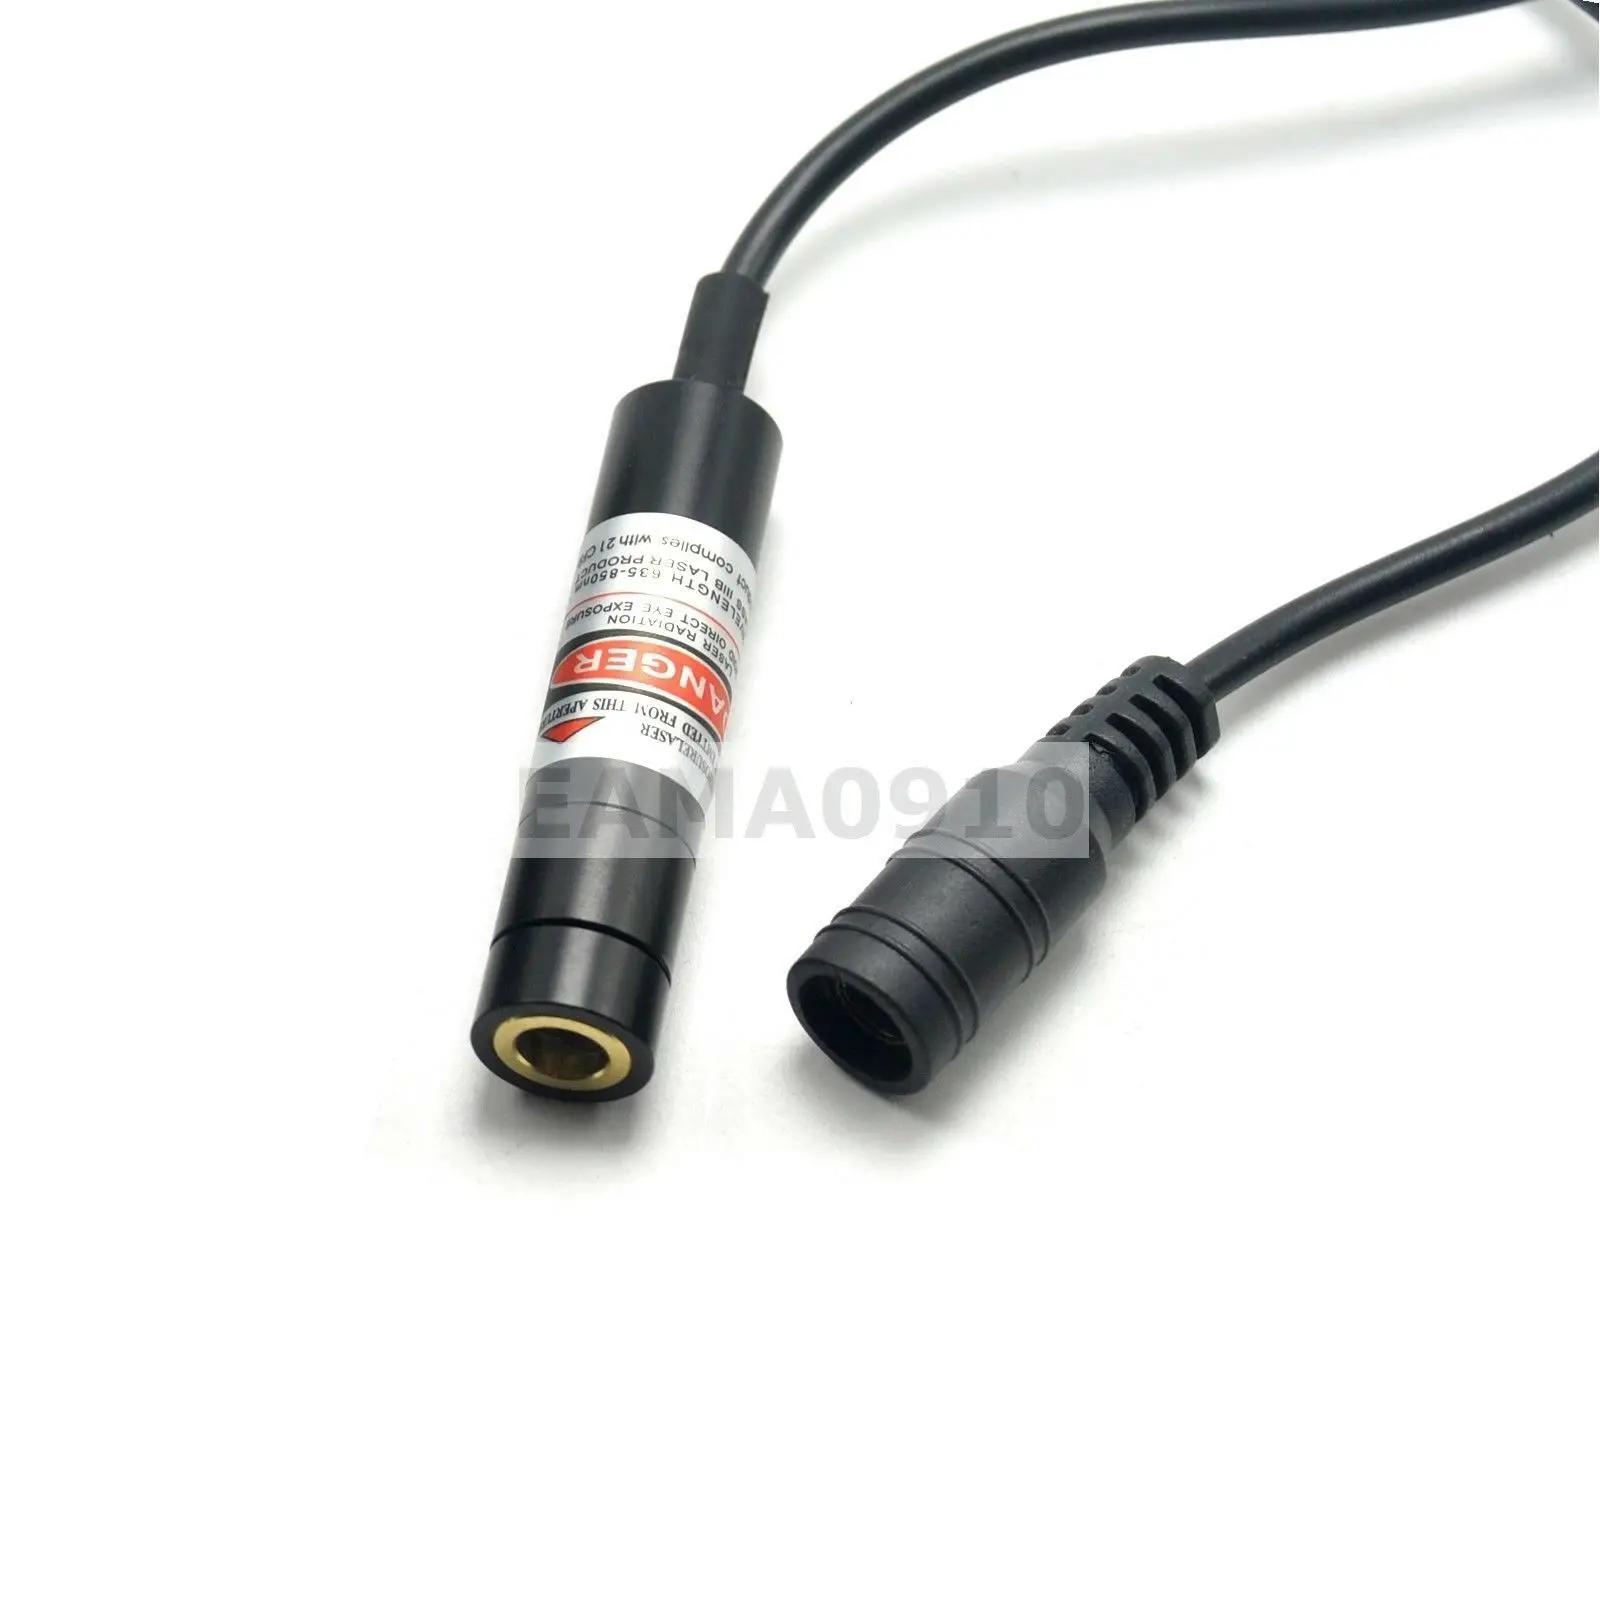 Fokussierbar 20mW Dot Rot Laser Licht Laser Diode Modul 650nm 12x55mm w/Adapter